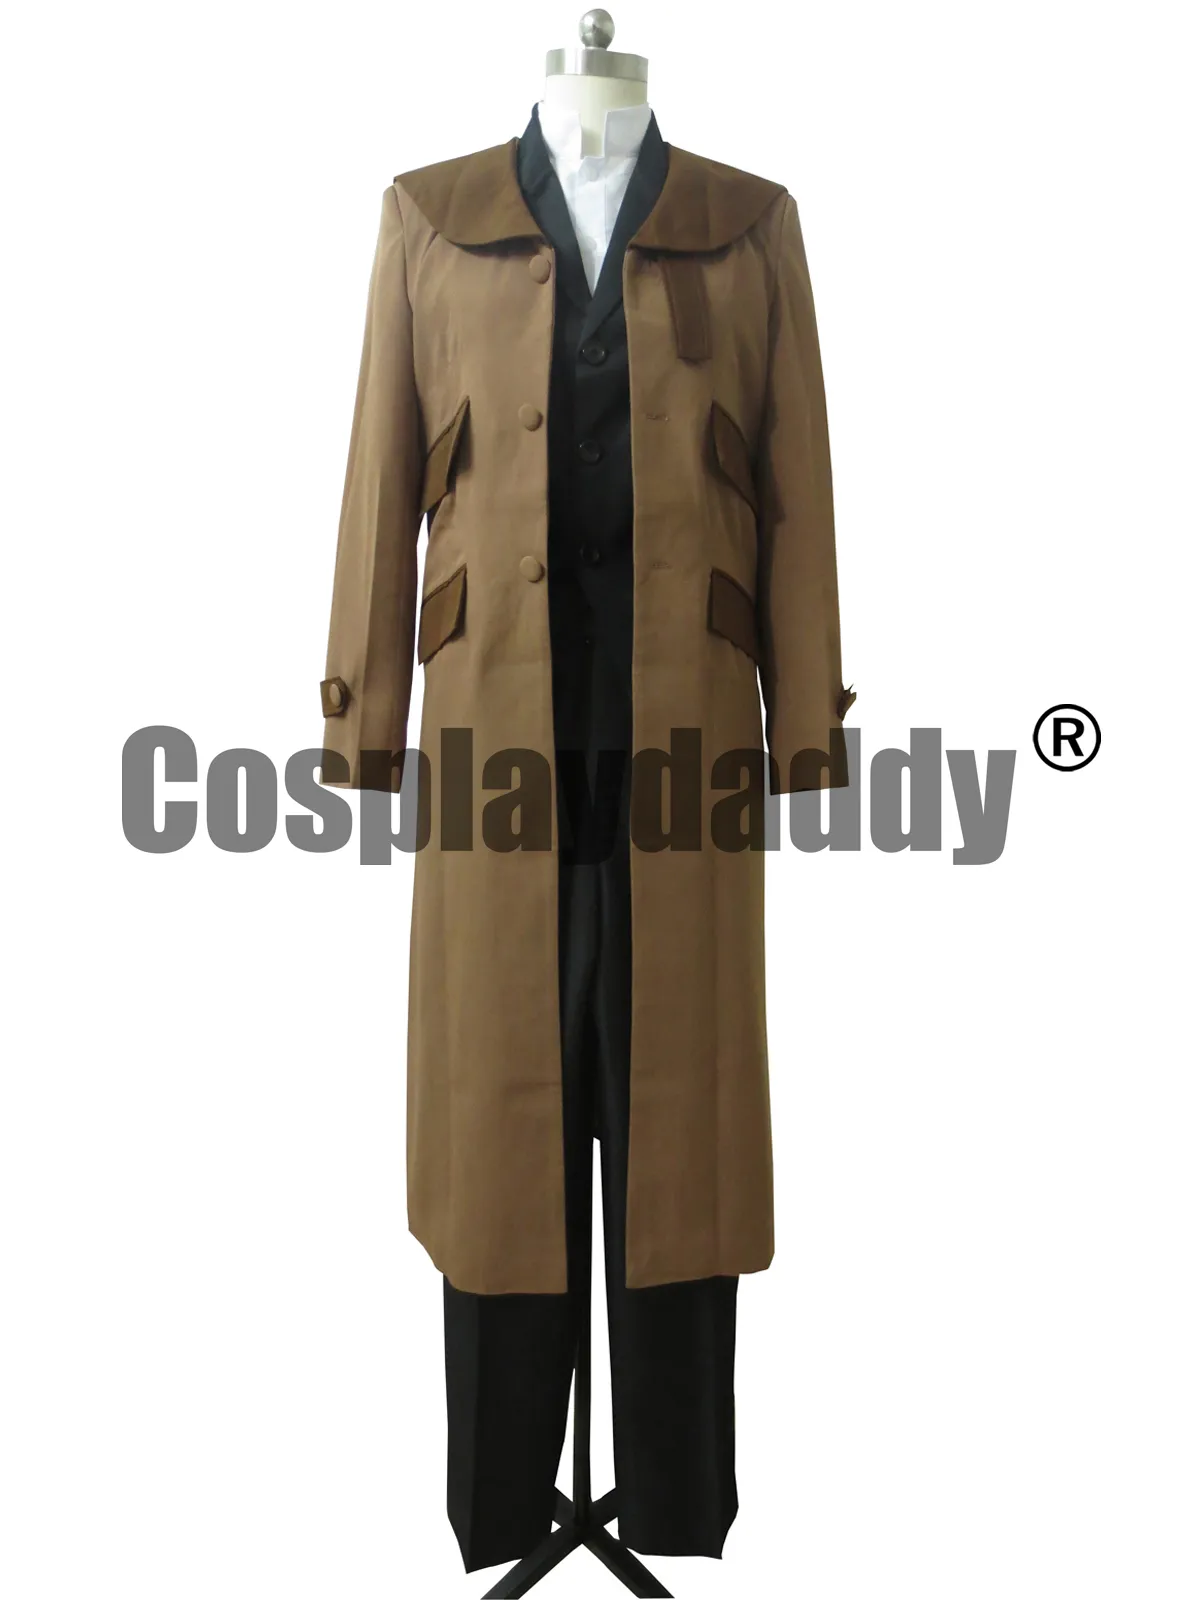 Costume de Cosplay d'alchimiste Fullmetal Edward Elric, Trench-Coat marron H008